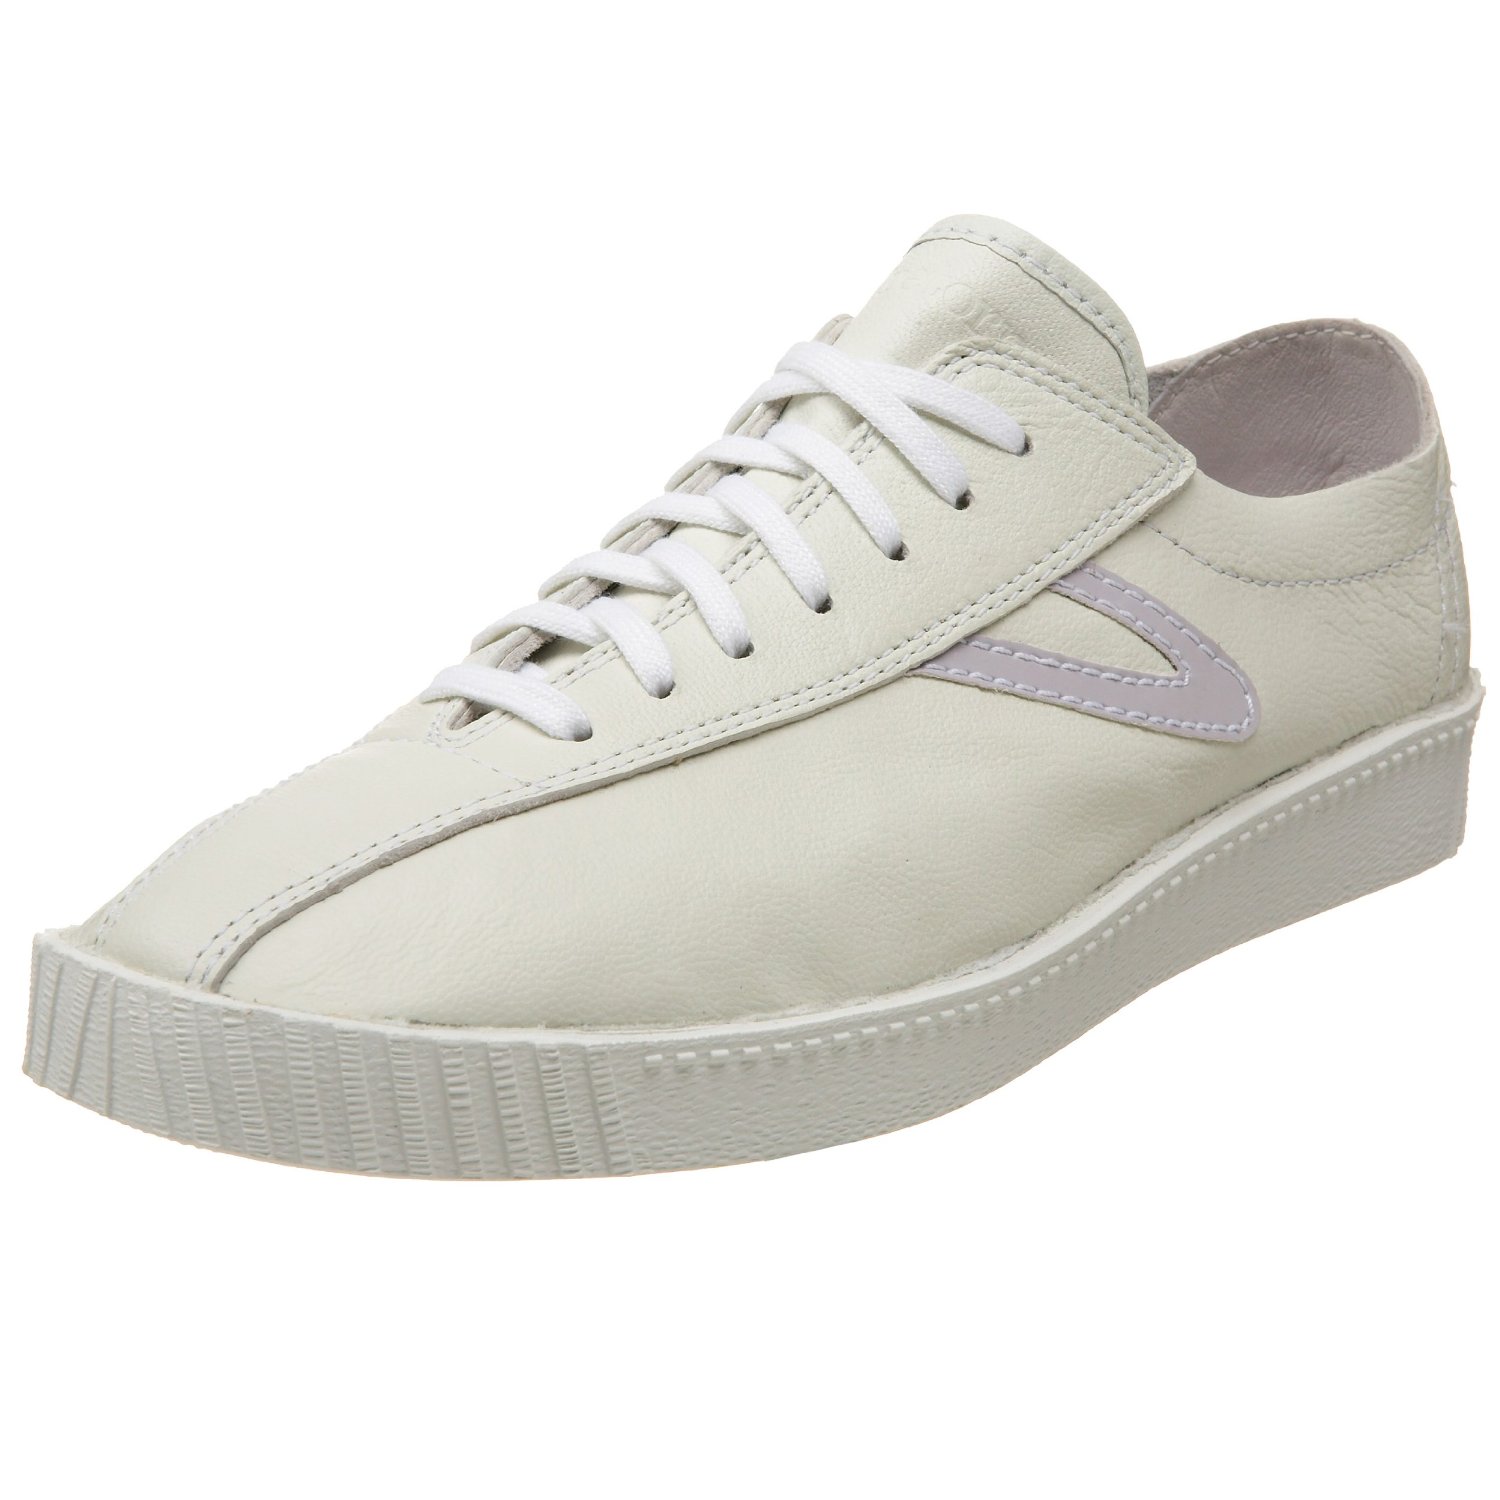 Tretorn Nylite Gto Sneaker in White (white/lilac marble) | Lyst